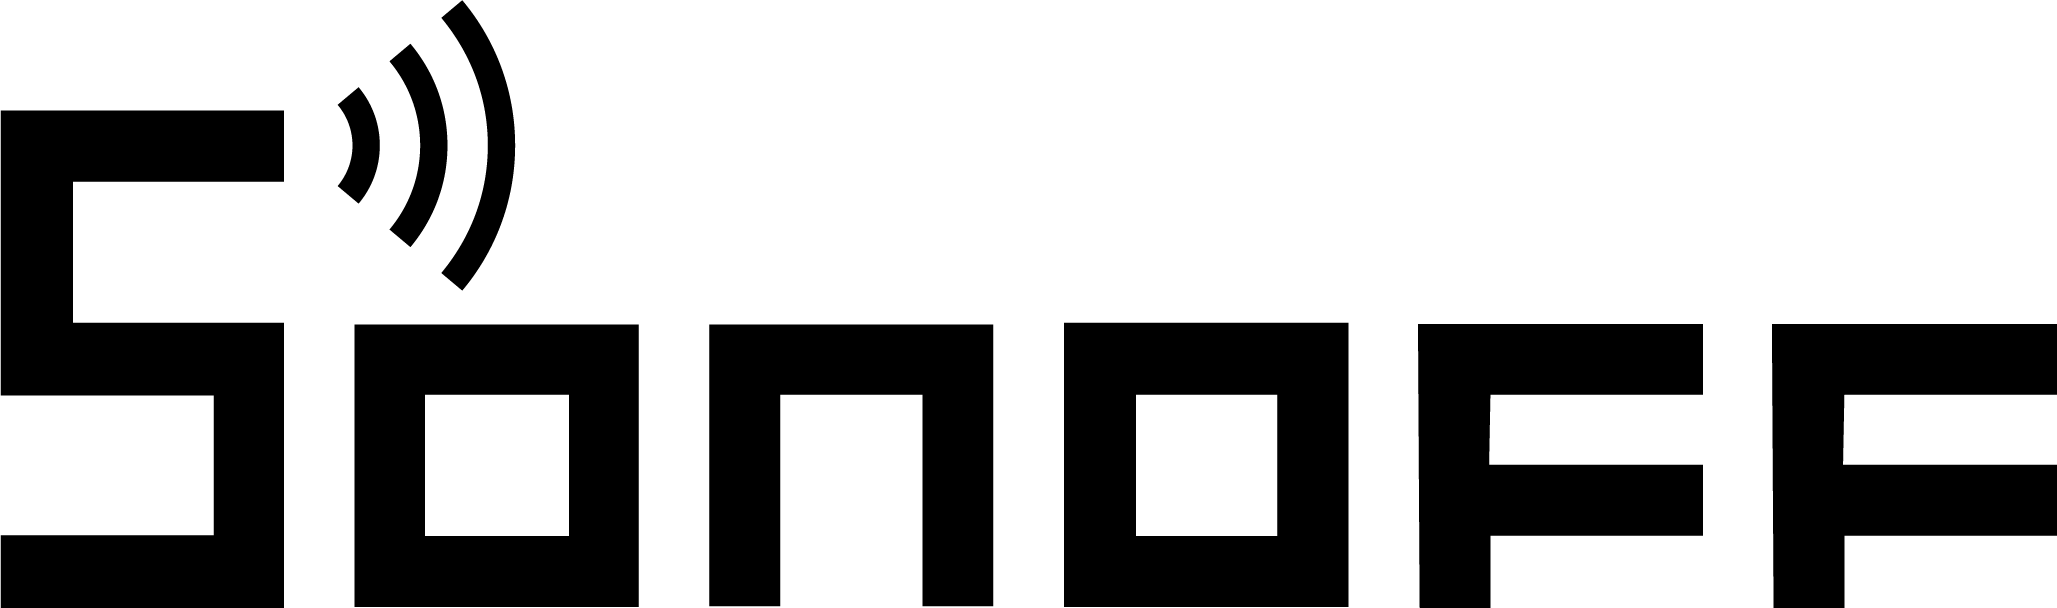 ITEAD Sonoff Logo